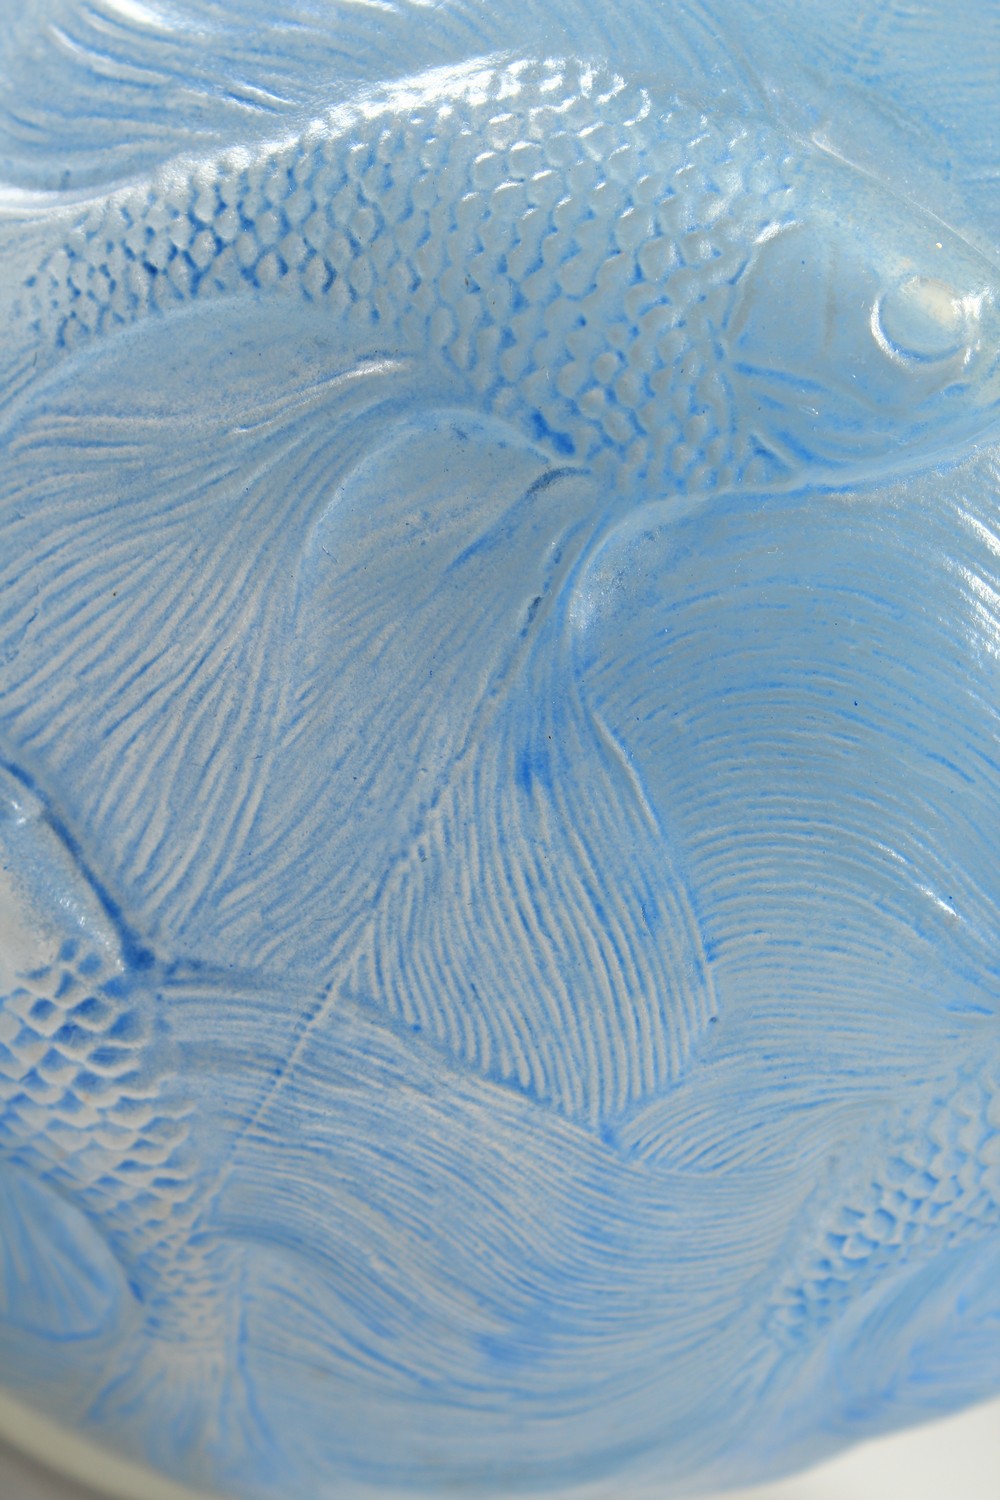 A LALIQUE BLUE TINTED VASE "FORMOSE". Etched R. LALIQUE, FRANCE. 16.5cm. - Image 4 of 7